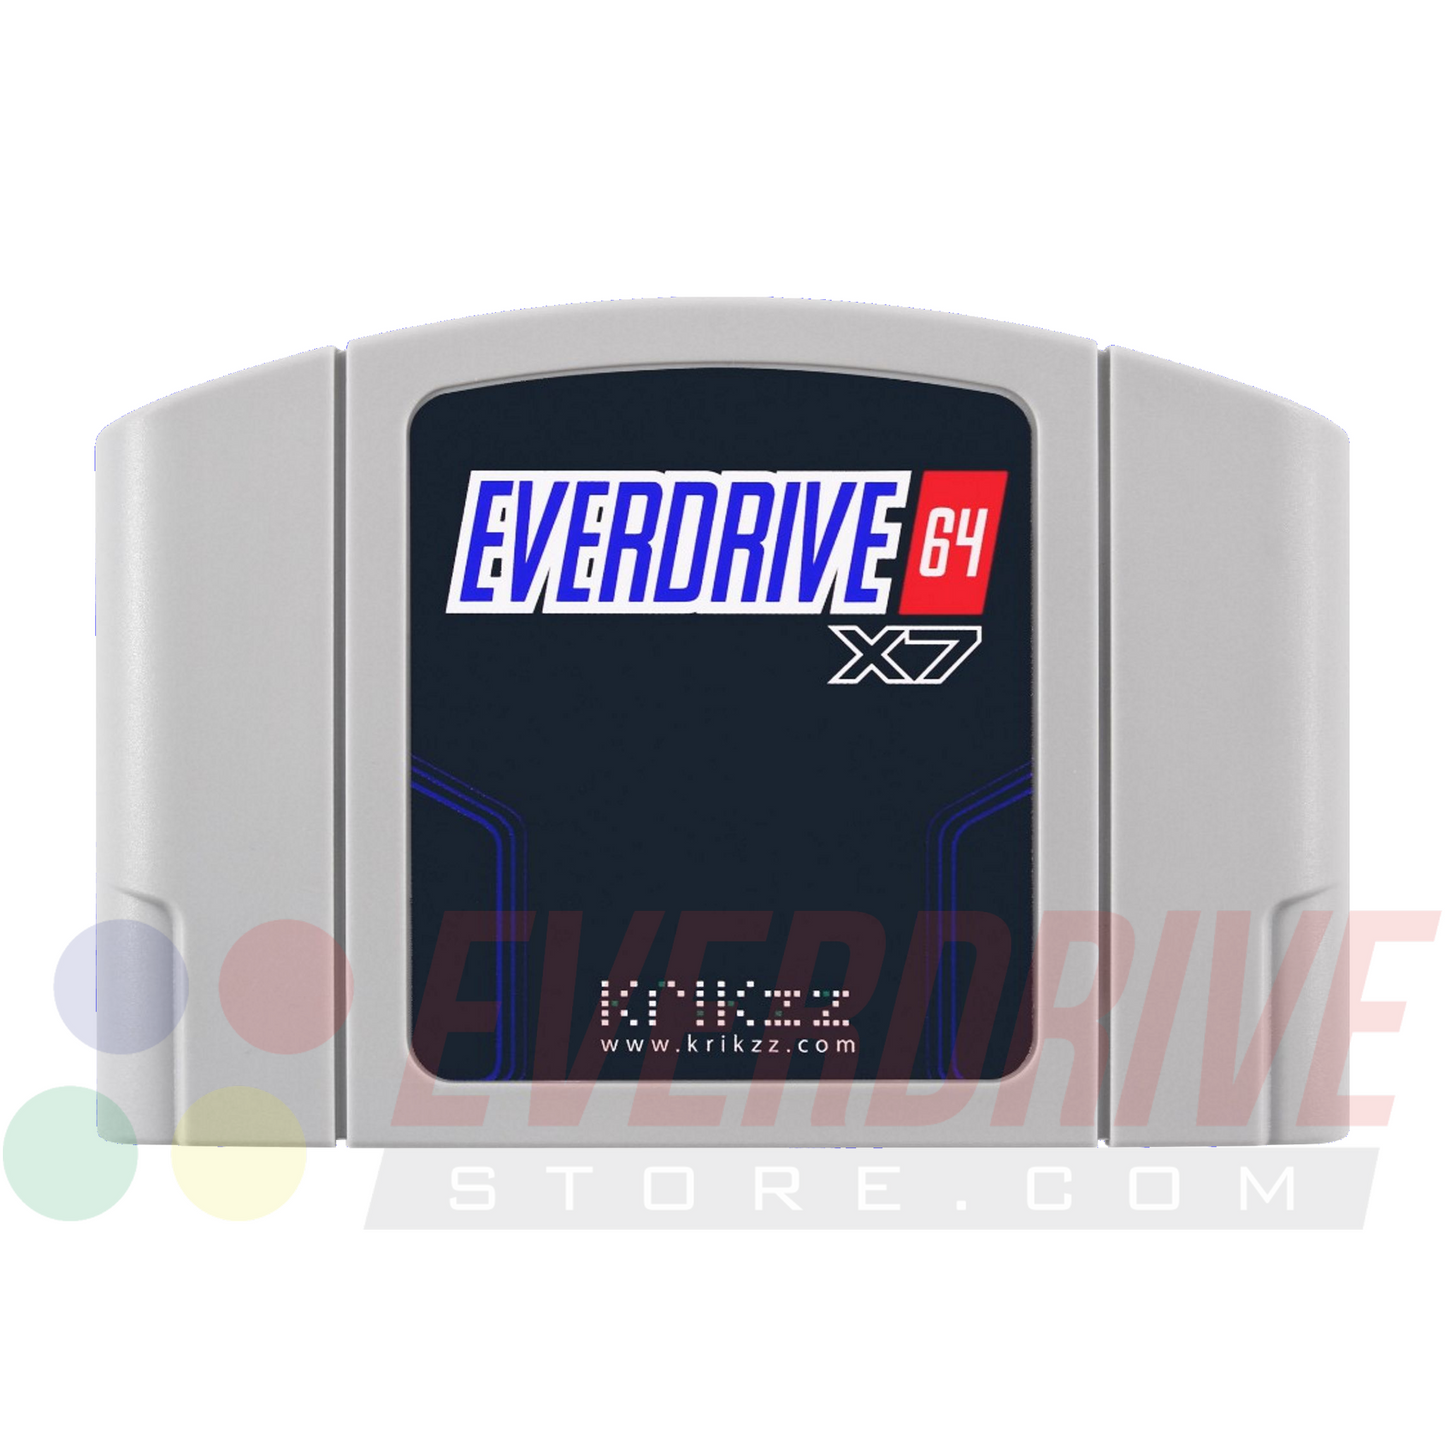 Everdrive 64 X7 - Gray